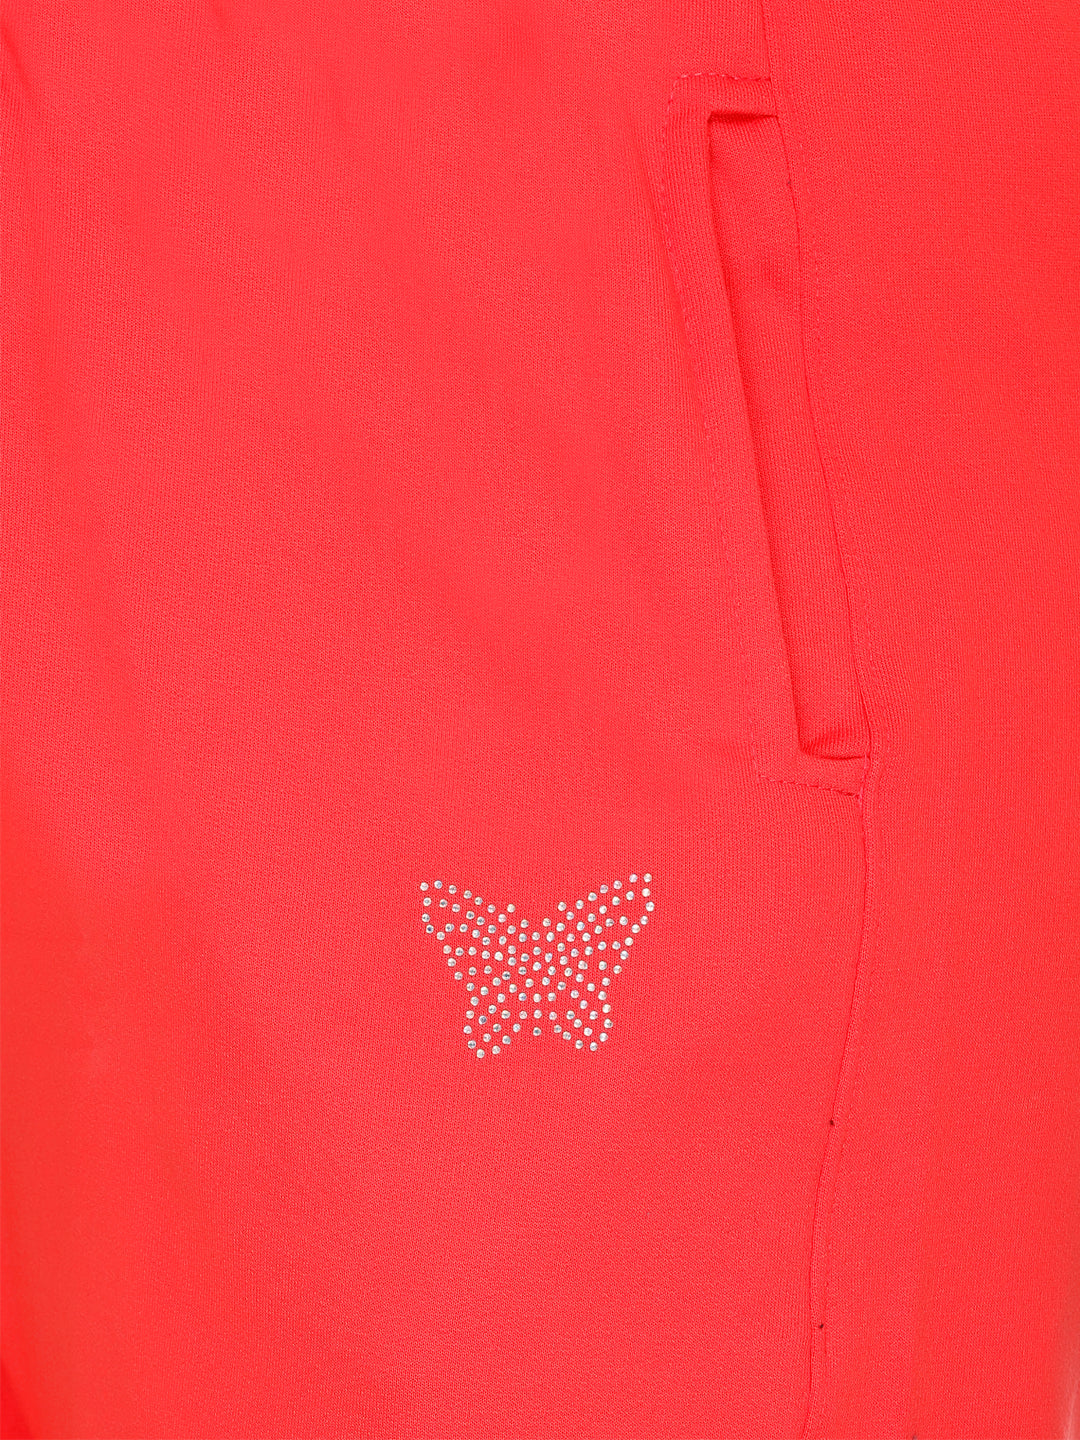 Comfy Red Cotton Winter Wear Warm Fleece For Women Online In India